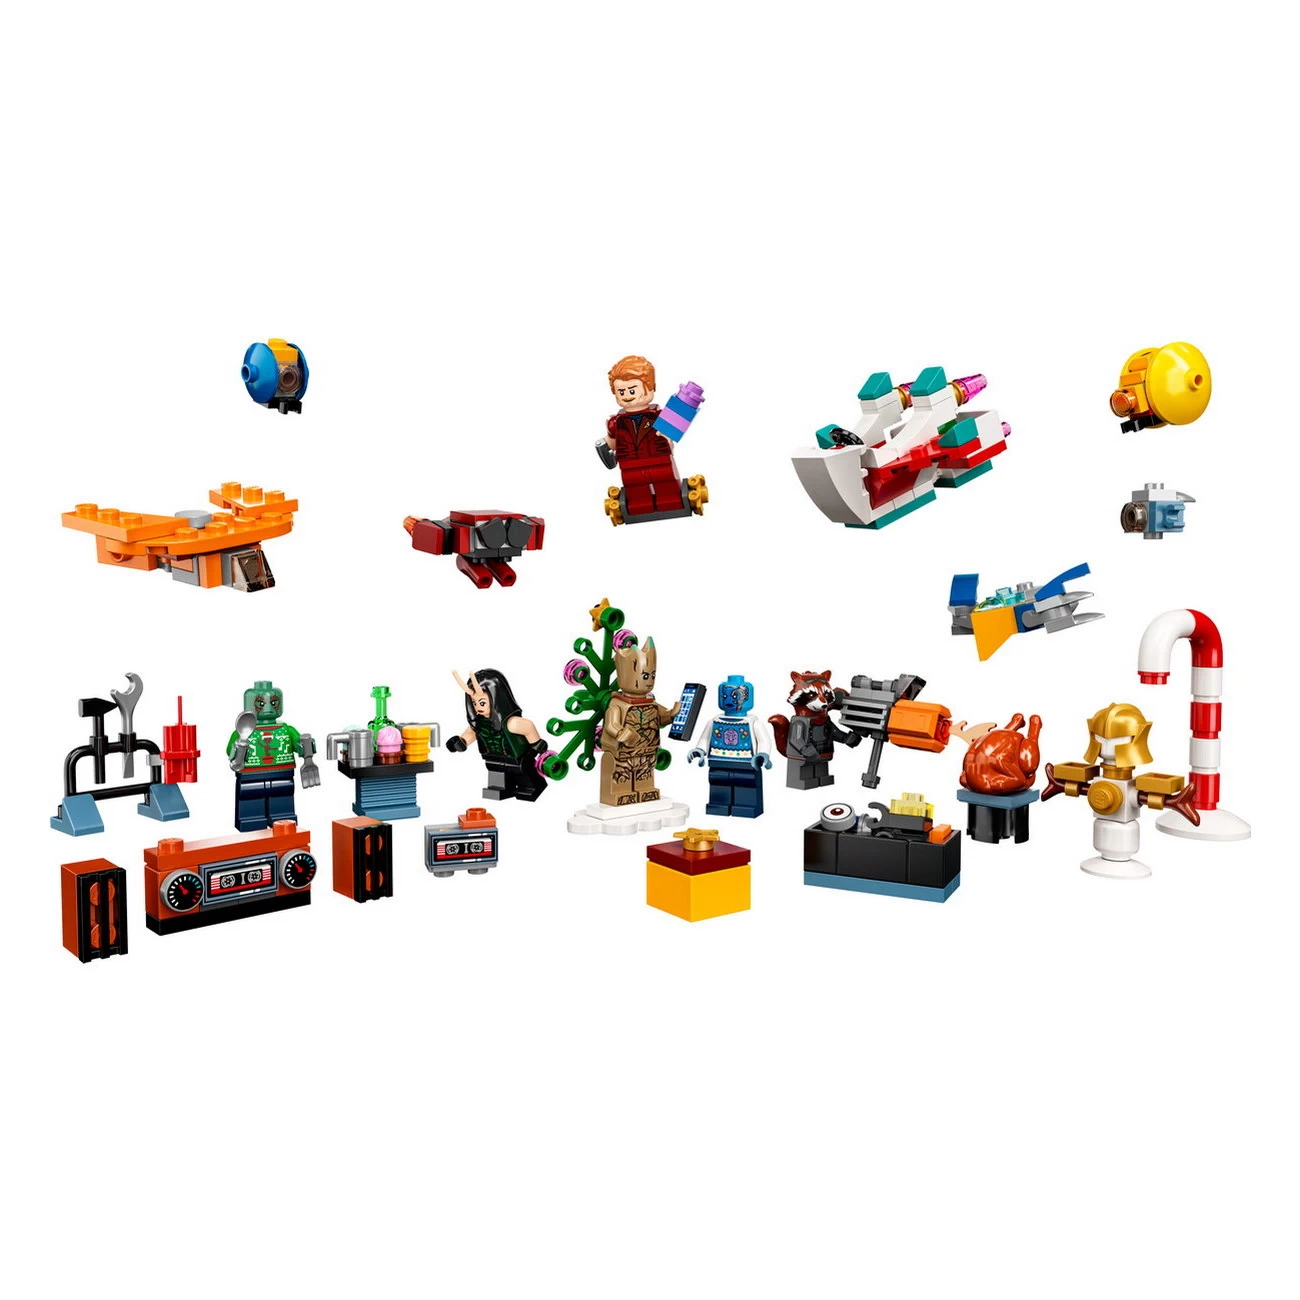 LEGO Guardians of the Galaxy - Adventskalender 2022 (76231)